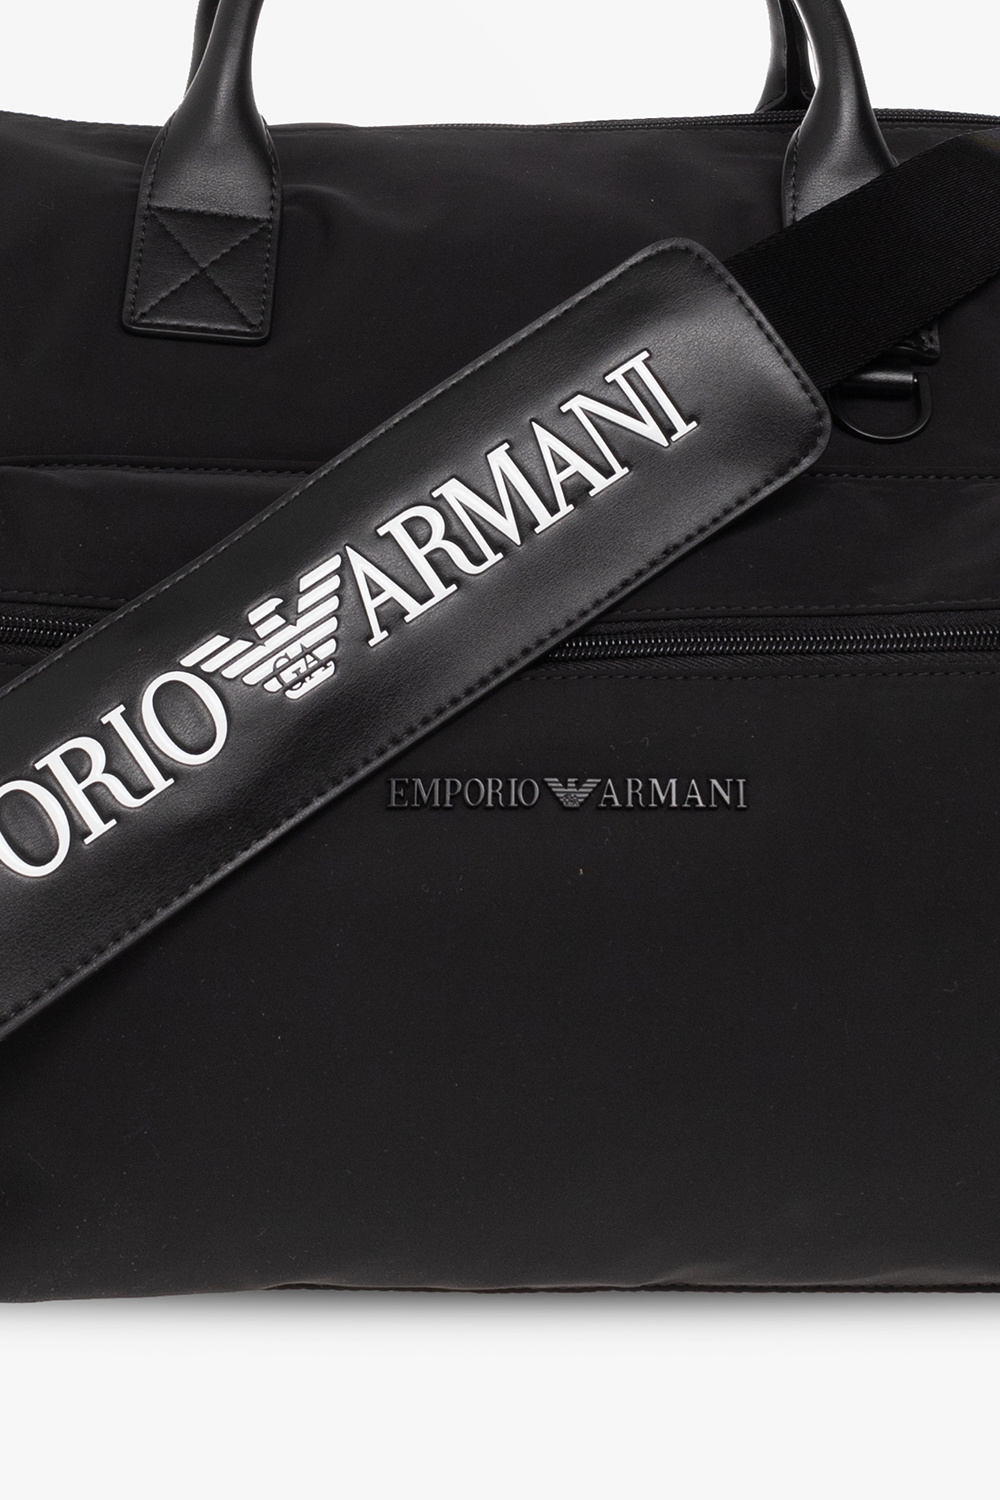 Emporio old armani Holdall bag